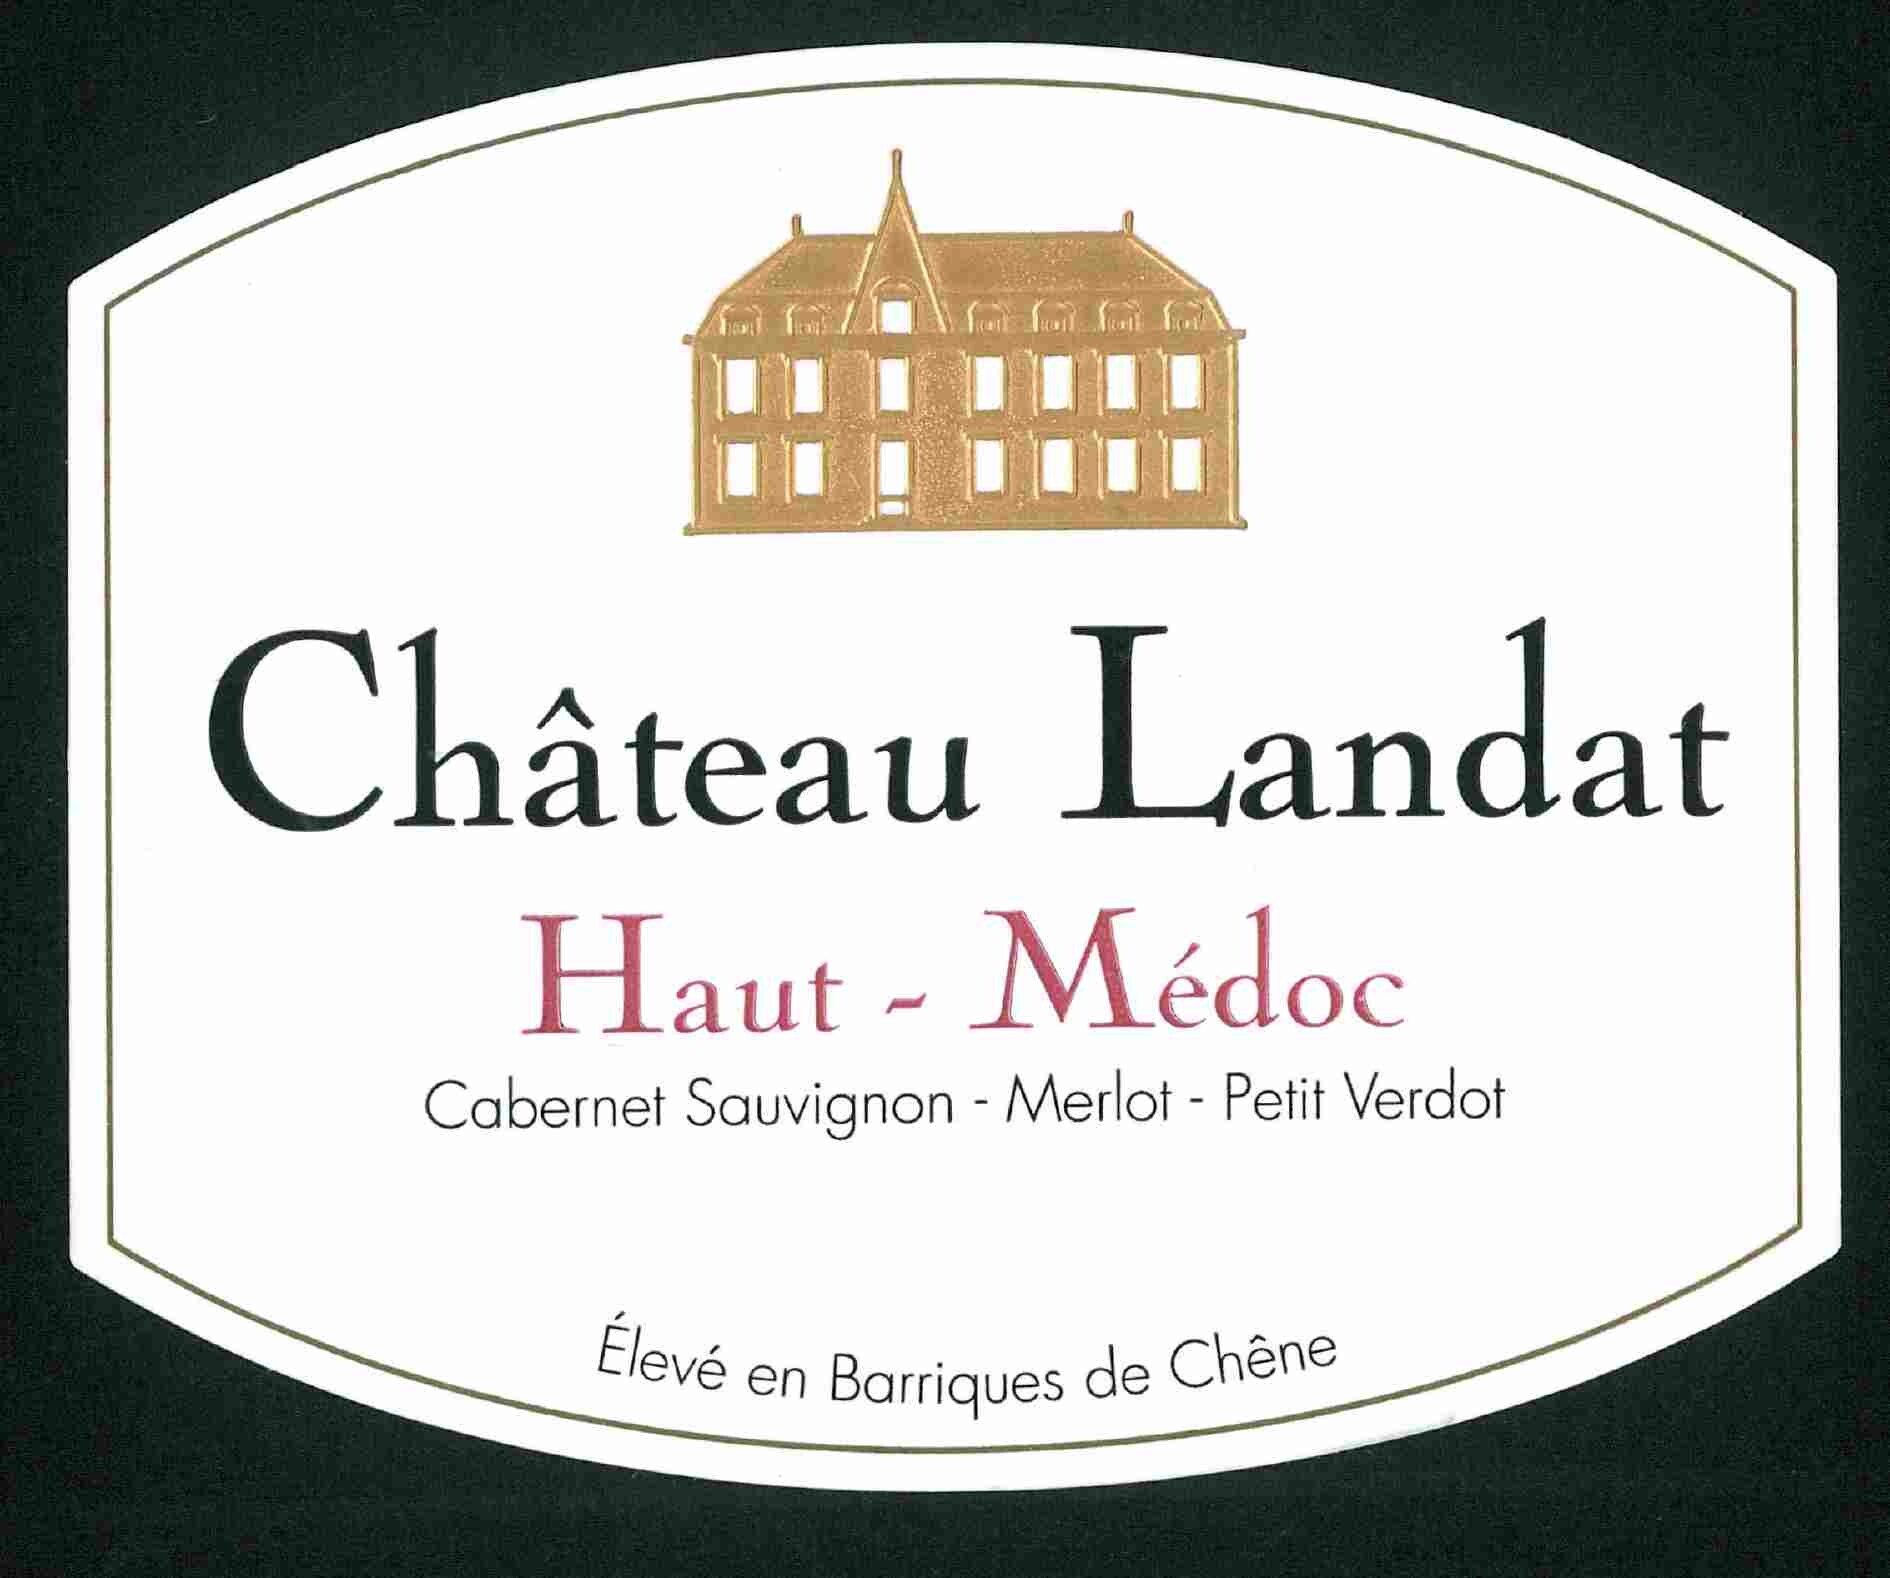 Chateau Landat Haut-Medoc Cru Bourgeois